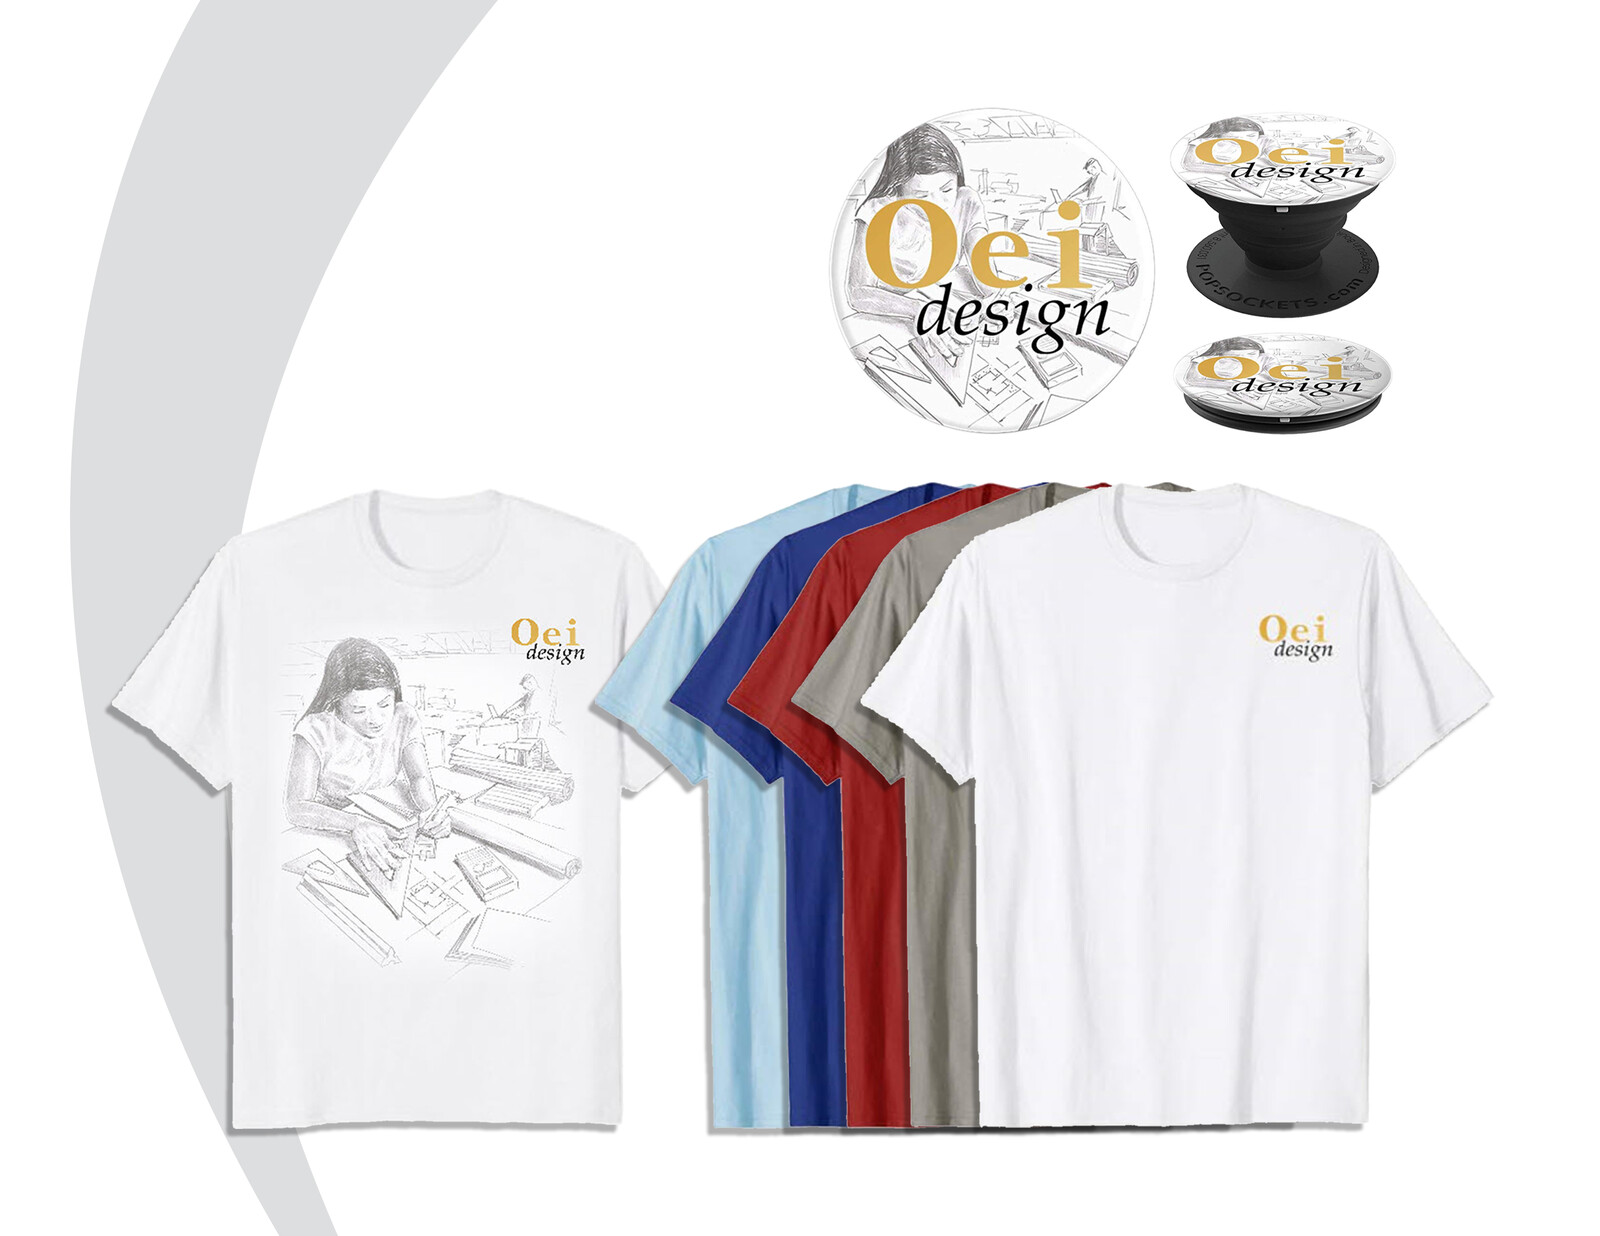 Official Oei Design merchandise